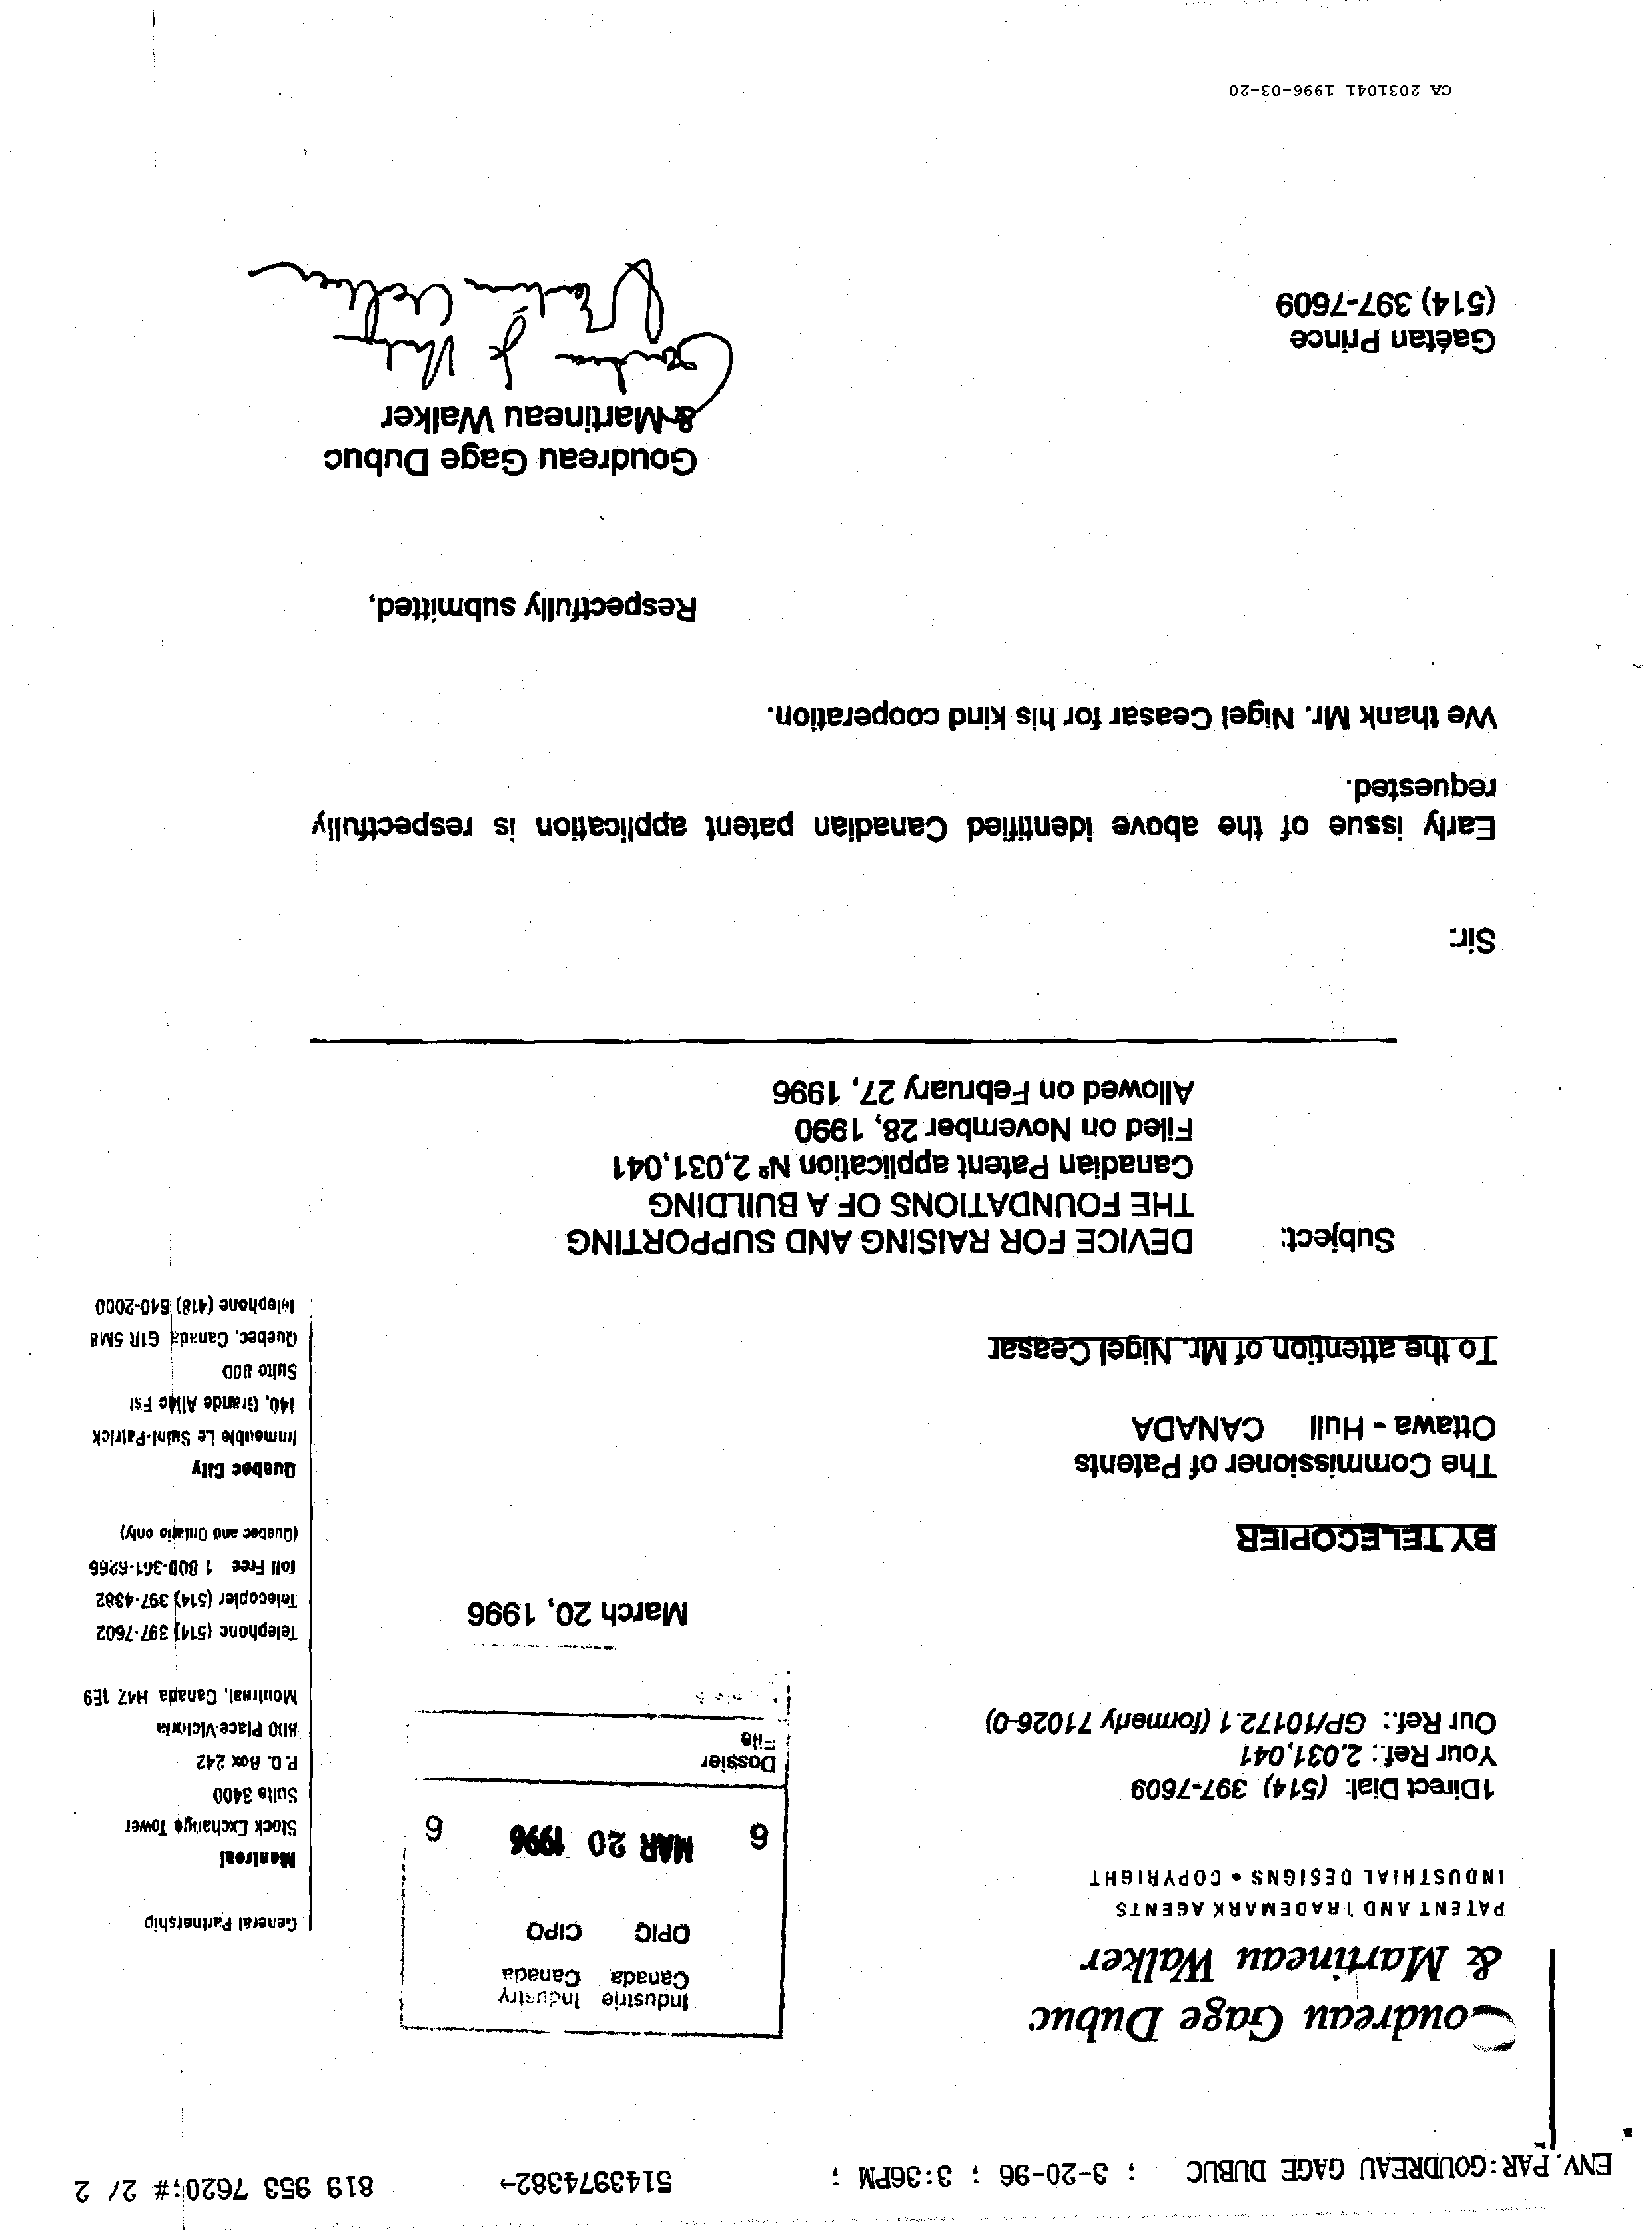 Canadian Patent Document 2031041. Correspondence 19951220. Image 1 of 2